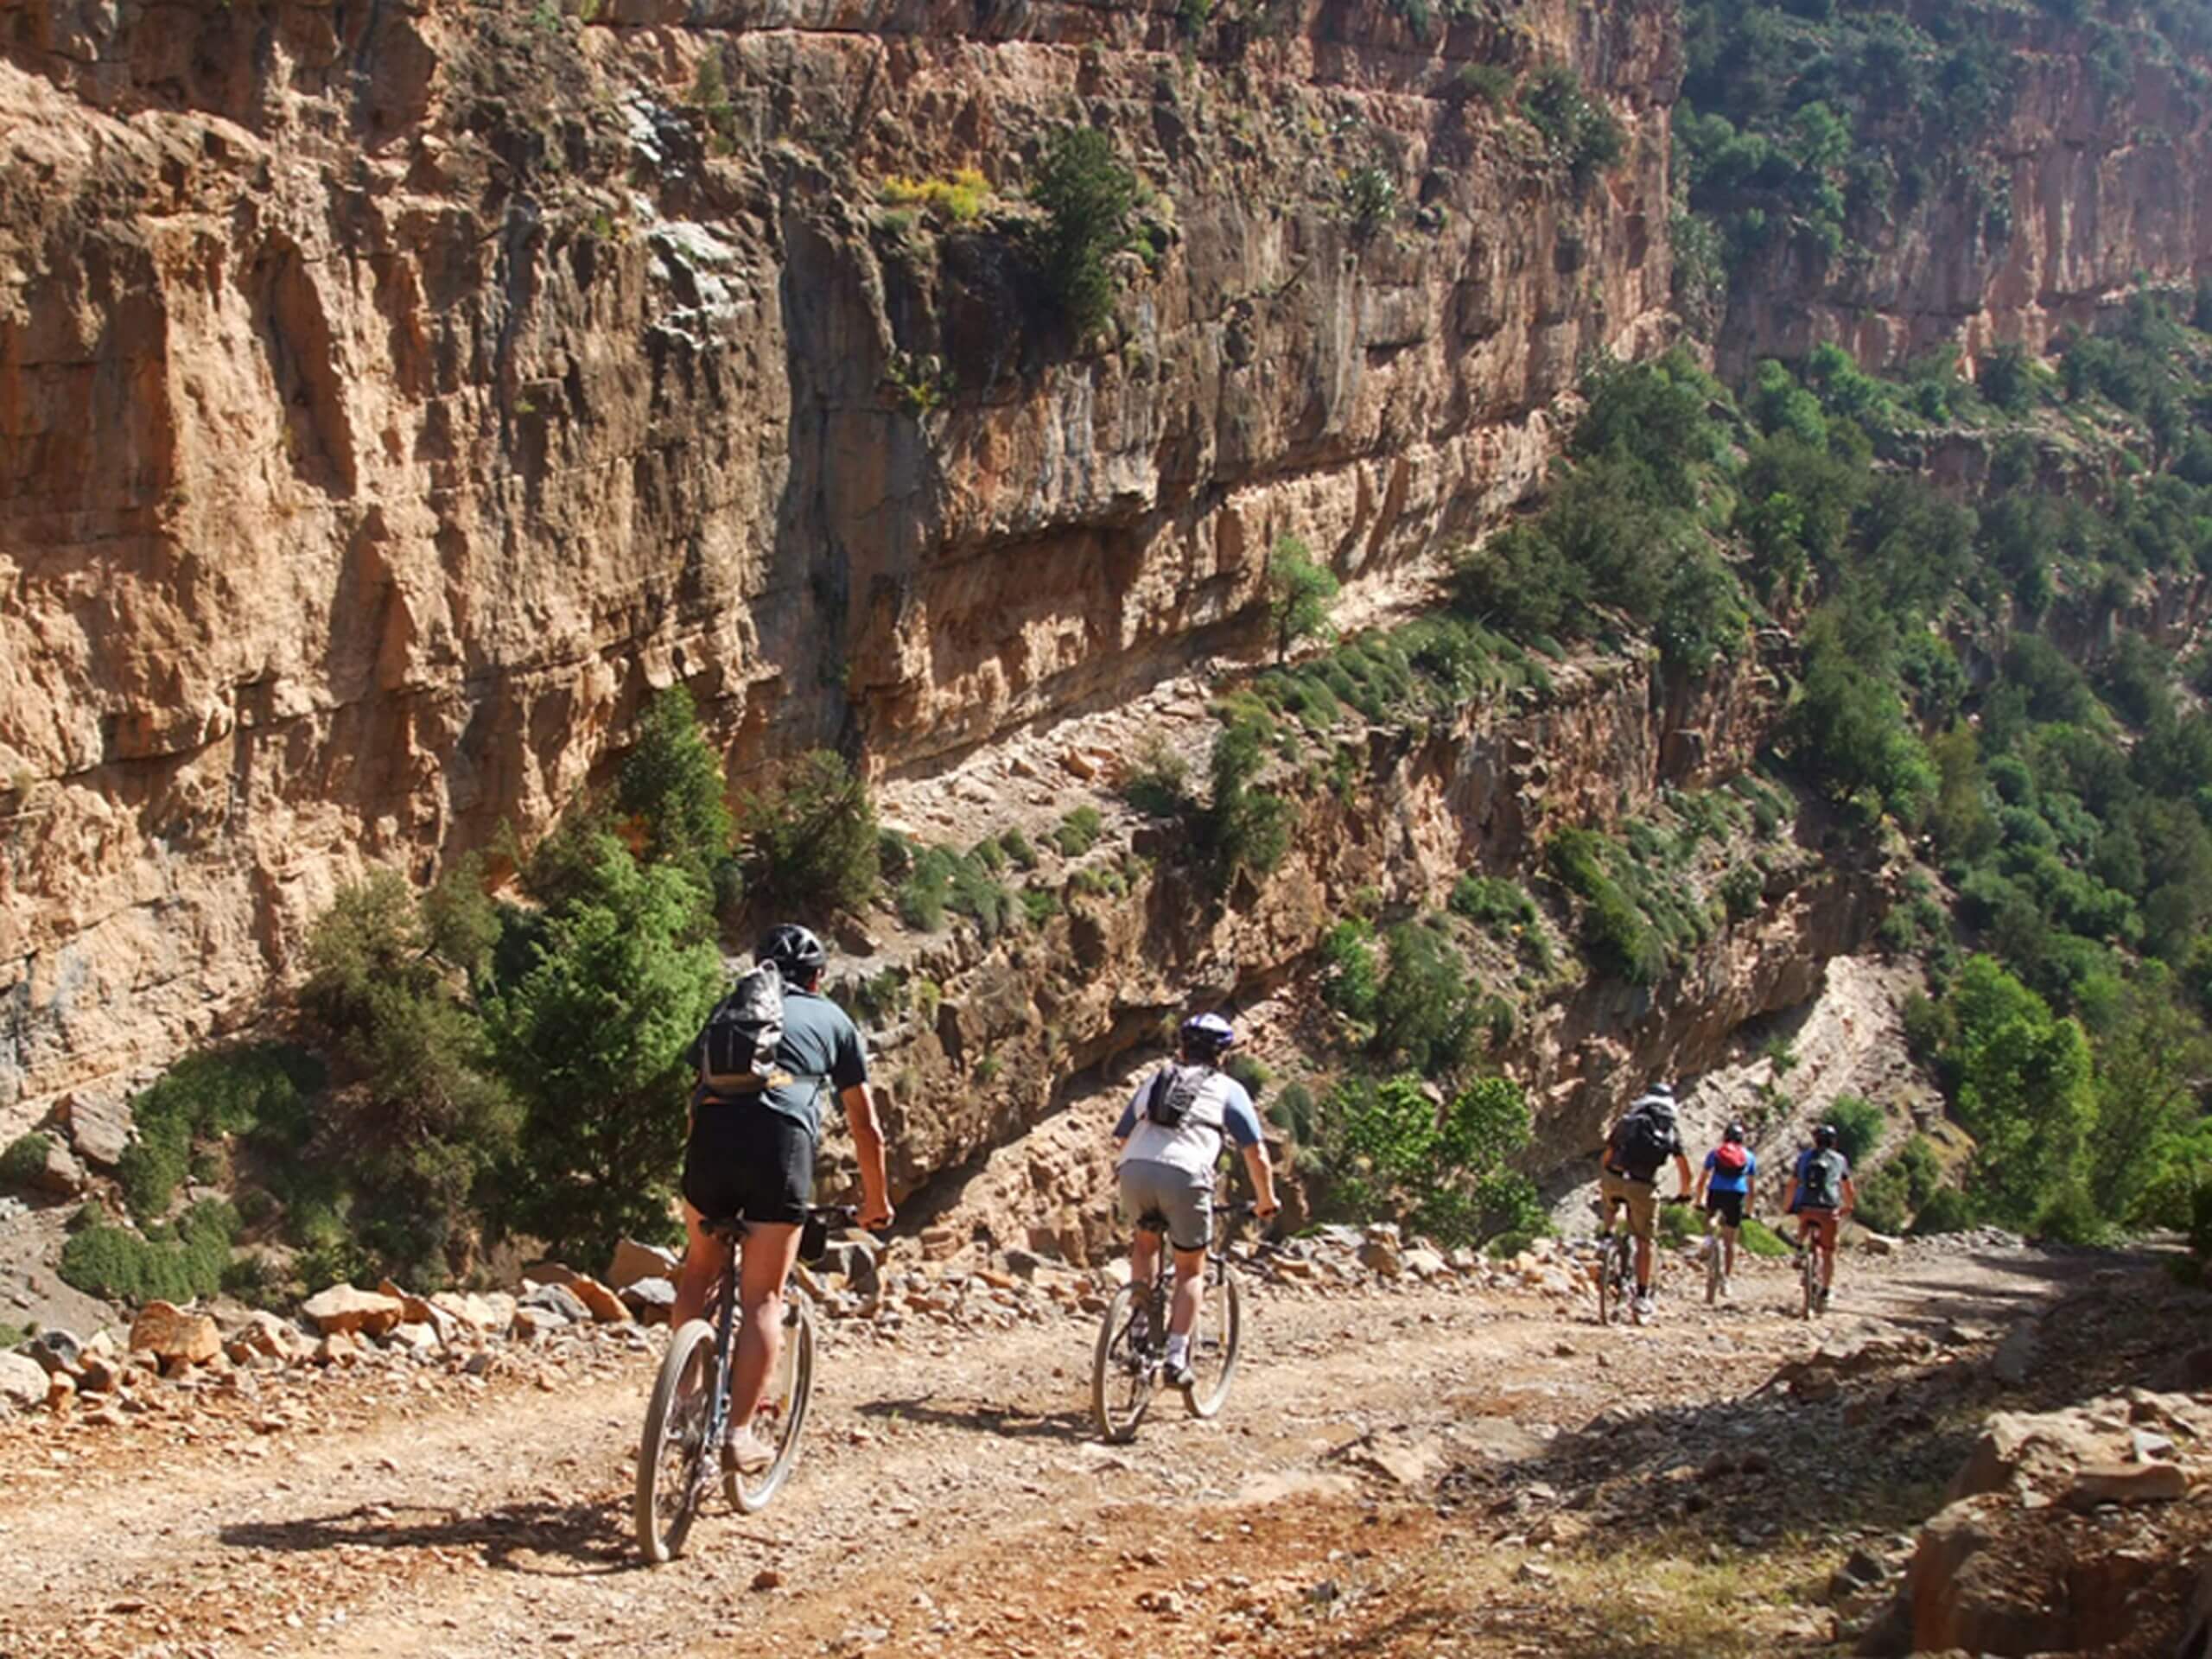 Mountain biking on a gravel path in Morocco